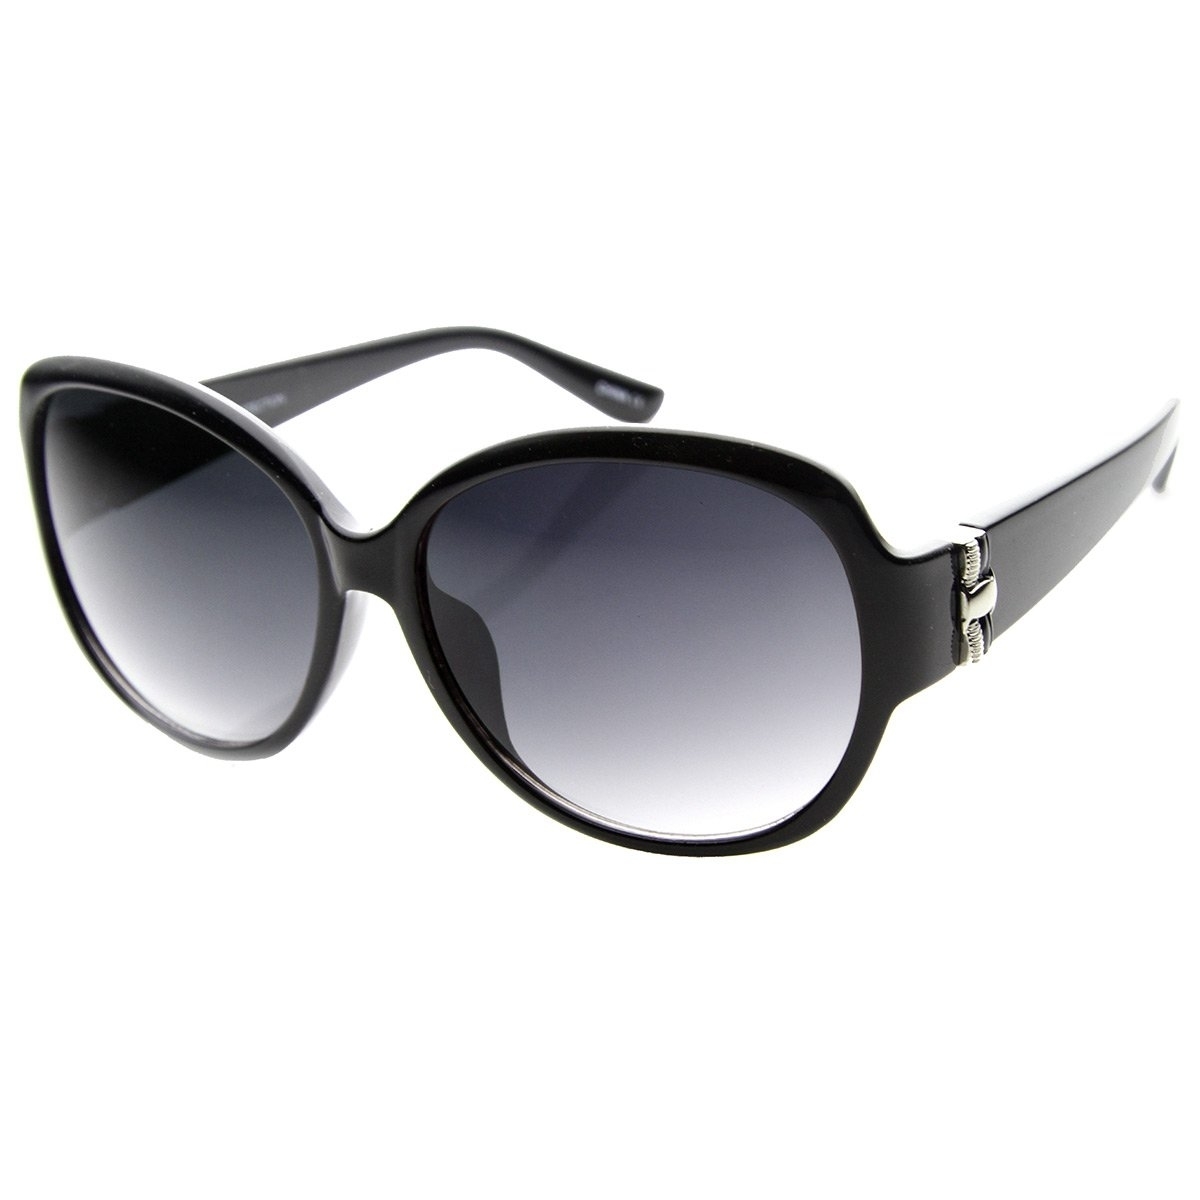 Designer Large Metal Accent Round Oversized Sunglasses - Tortoise-Brown Amber